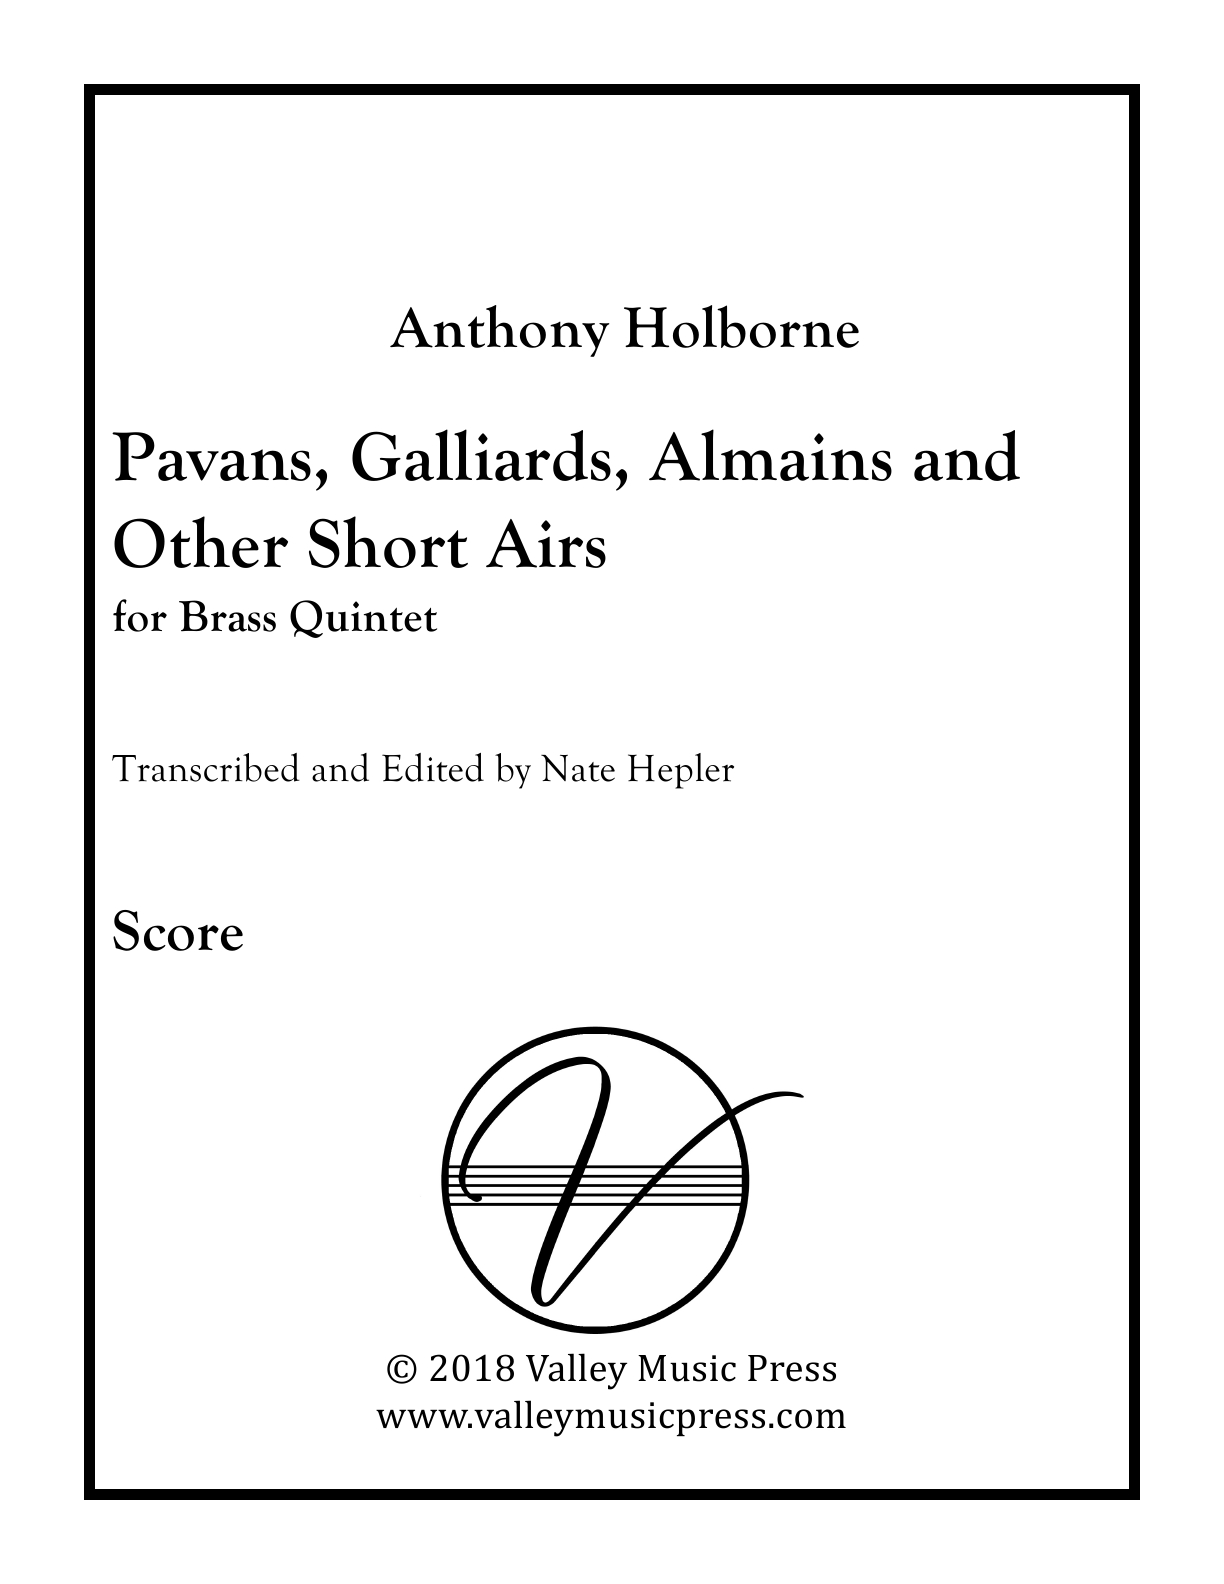 Holborne - Pavans, Galliards, Almains and Short Airs (All) (BQ)